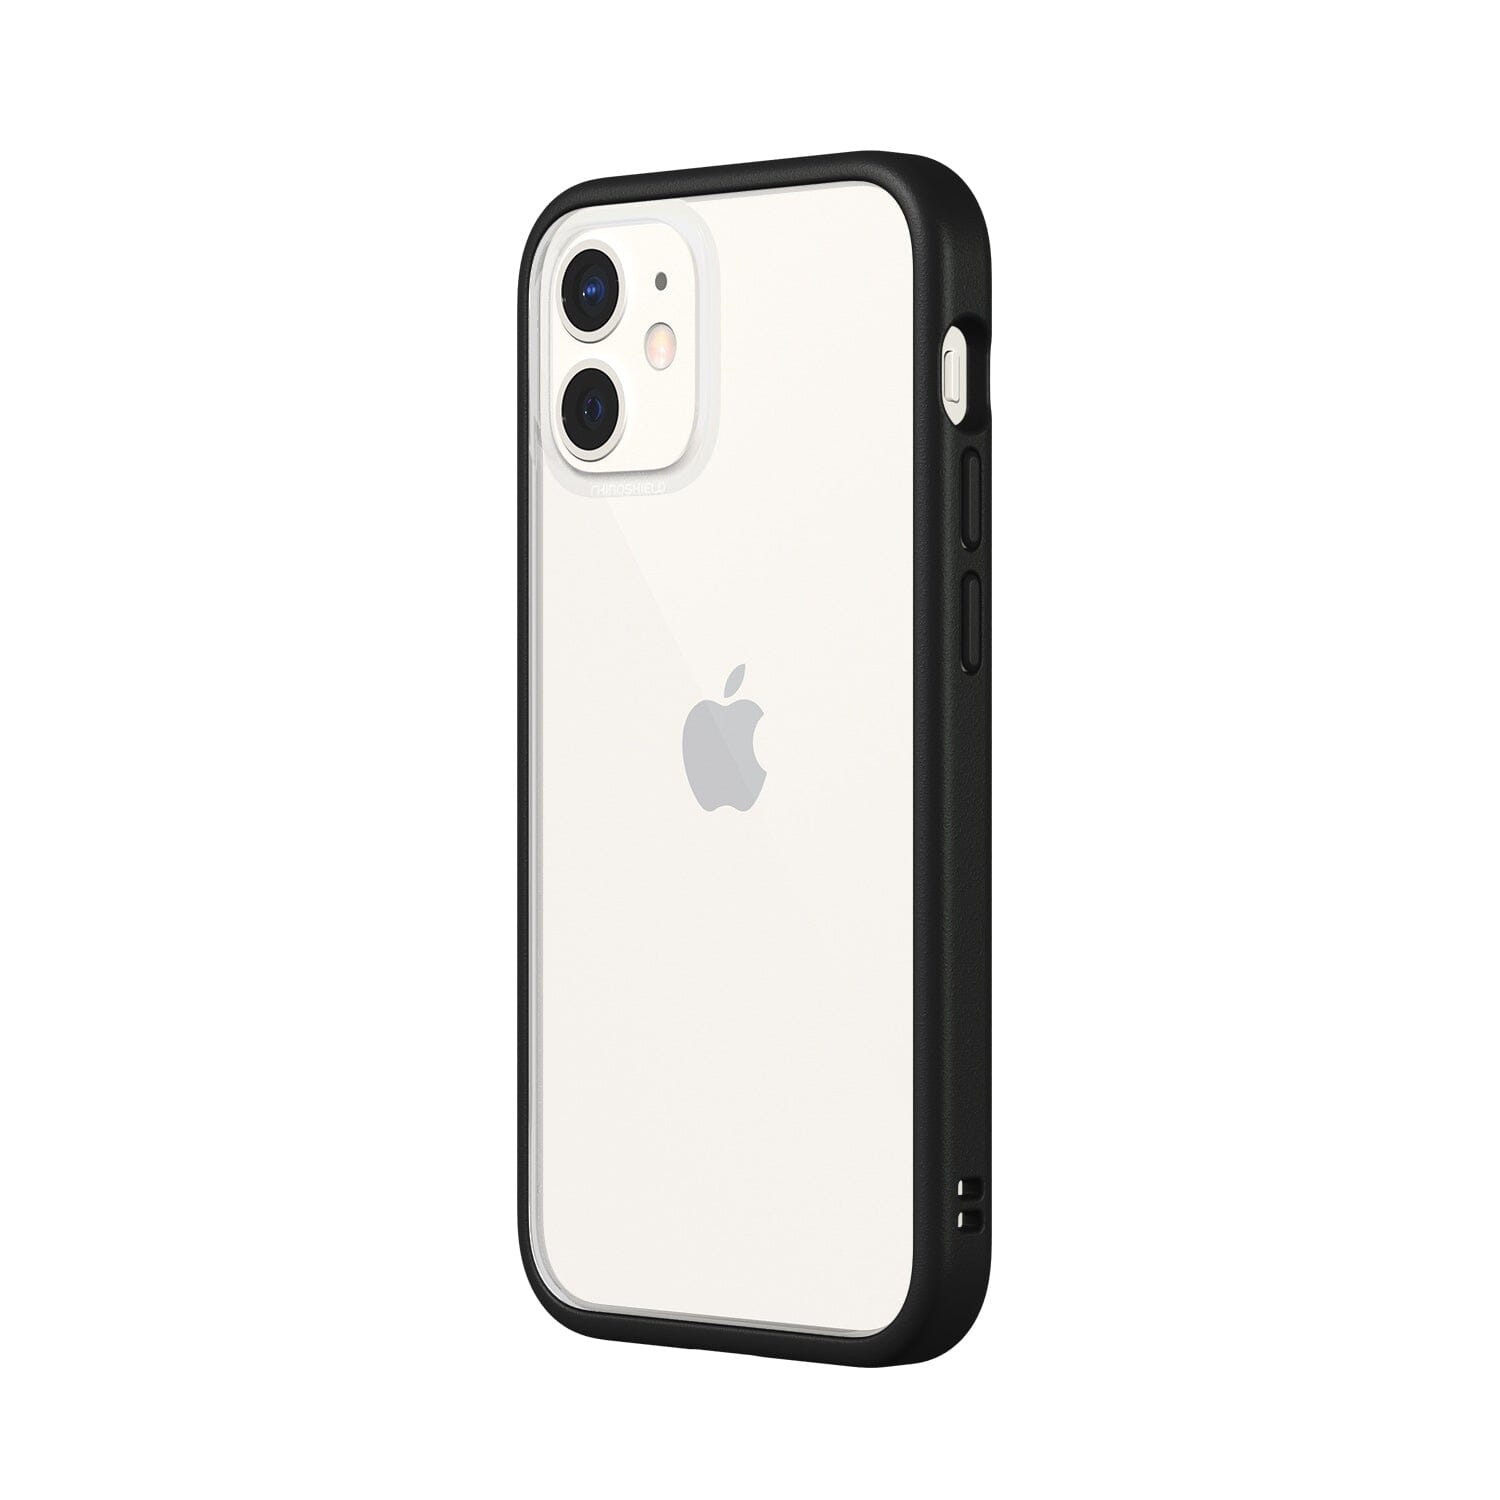 RhinoShield Mod NX Modular Case for iPhone 12 Series (2020) iPhone 12 Series RhinoShield iPhone 12 mini 5.4" Black 